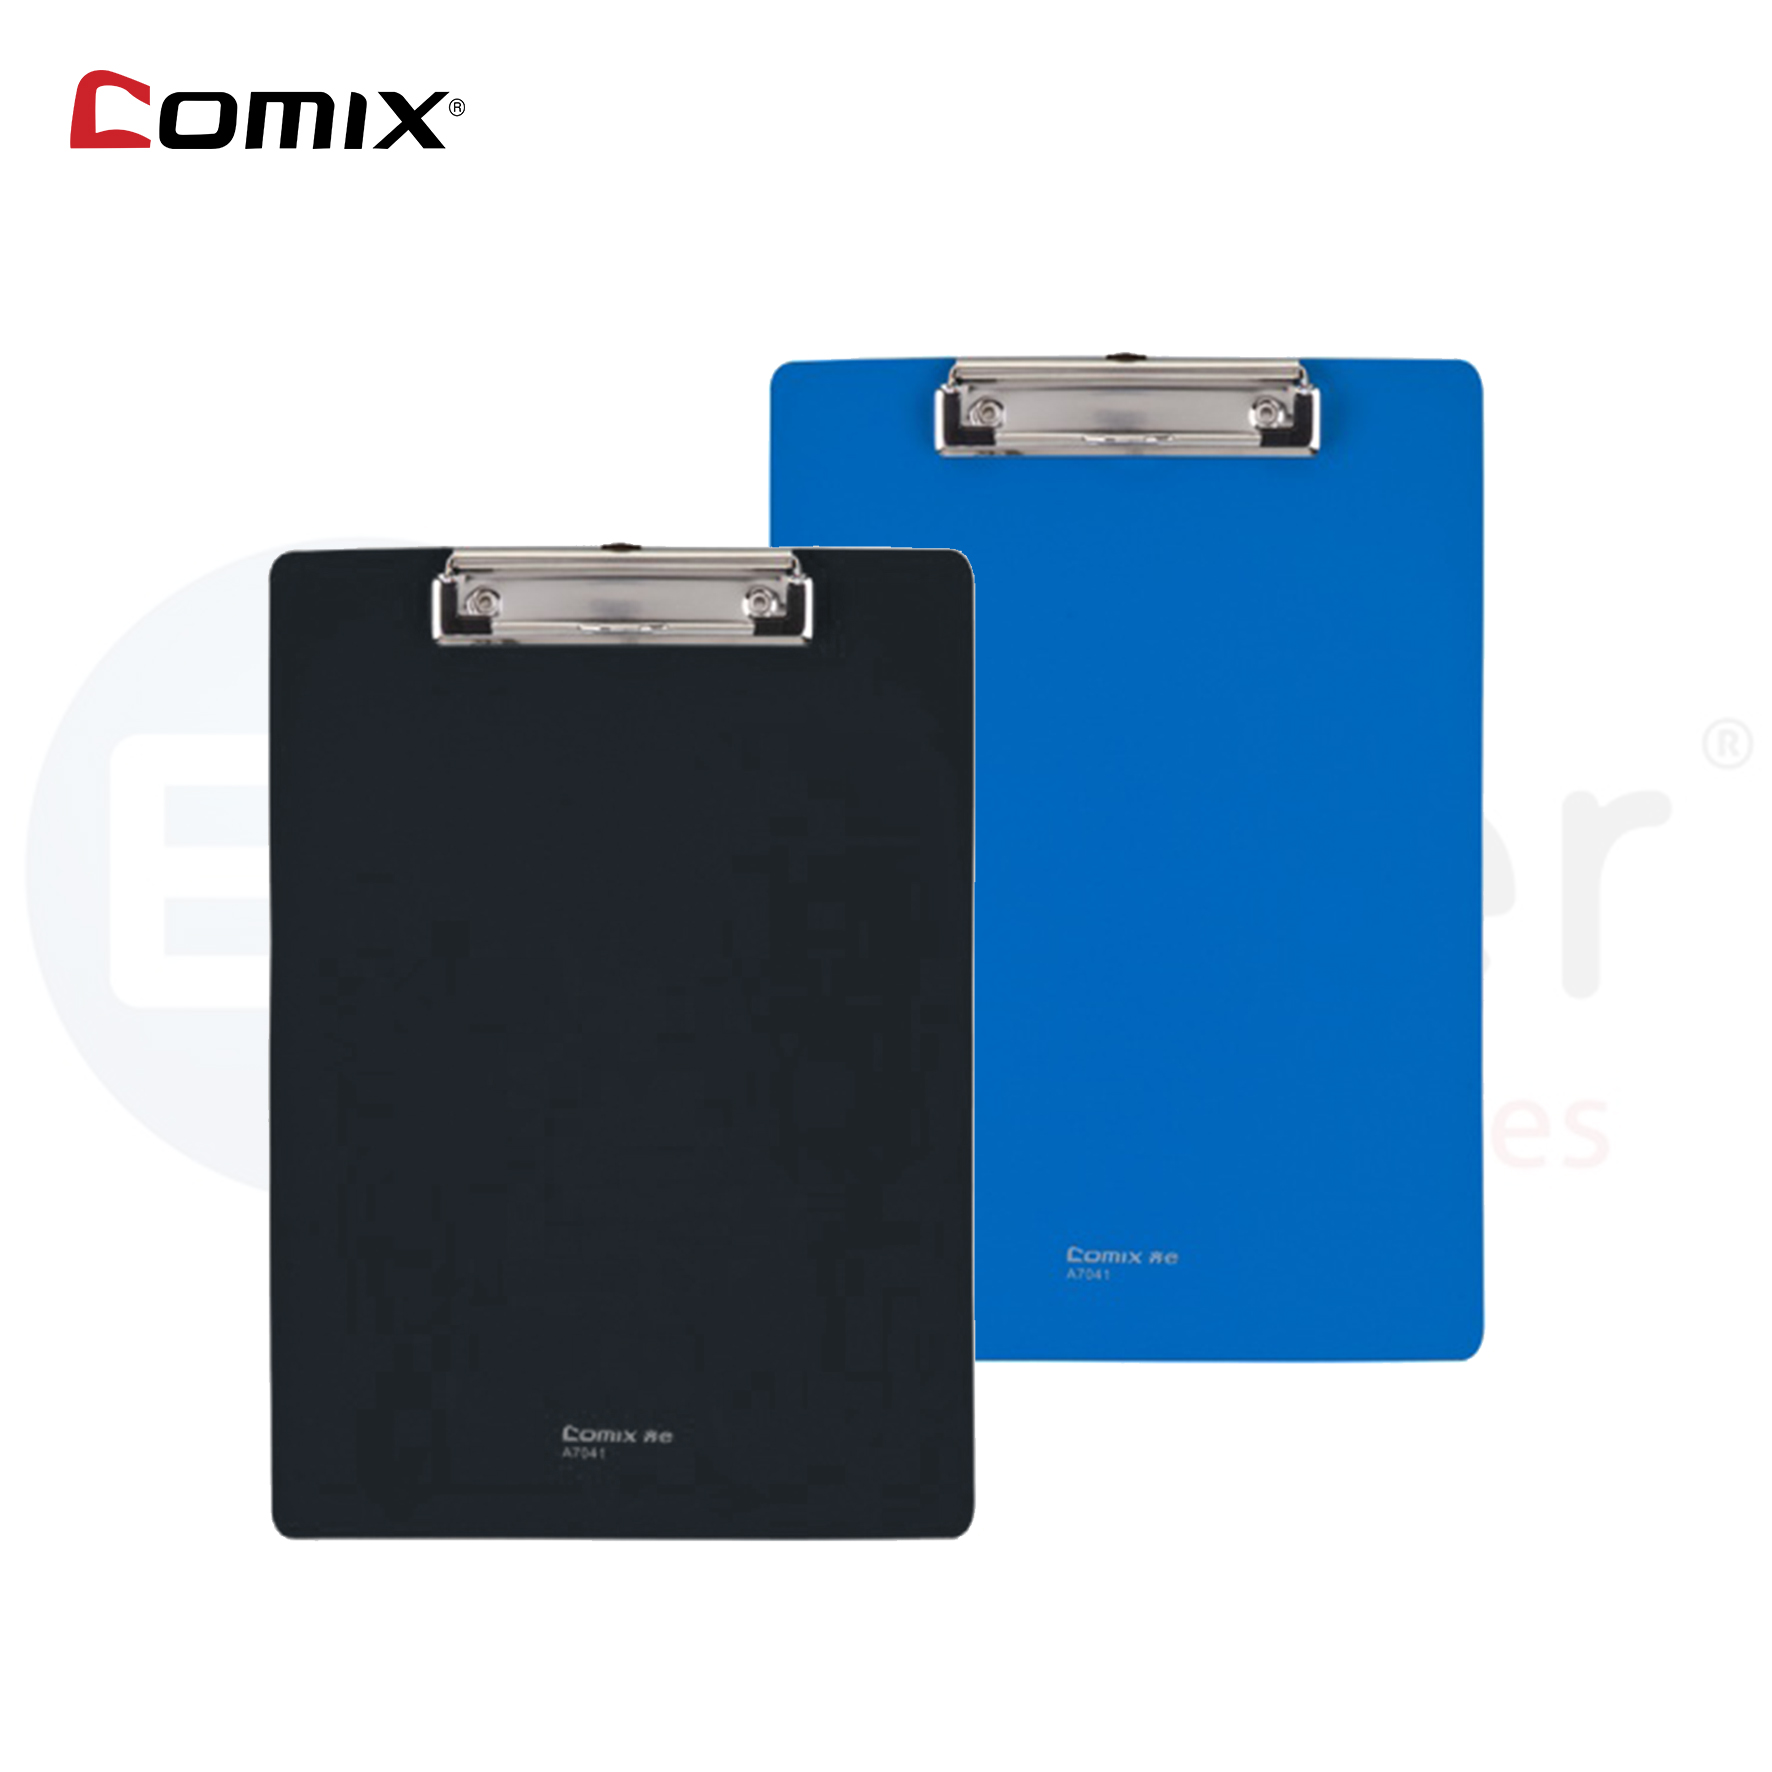 COMIX Clipboard, A4 W/ metal clip black or blue